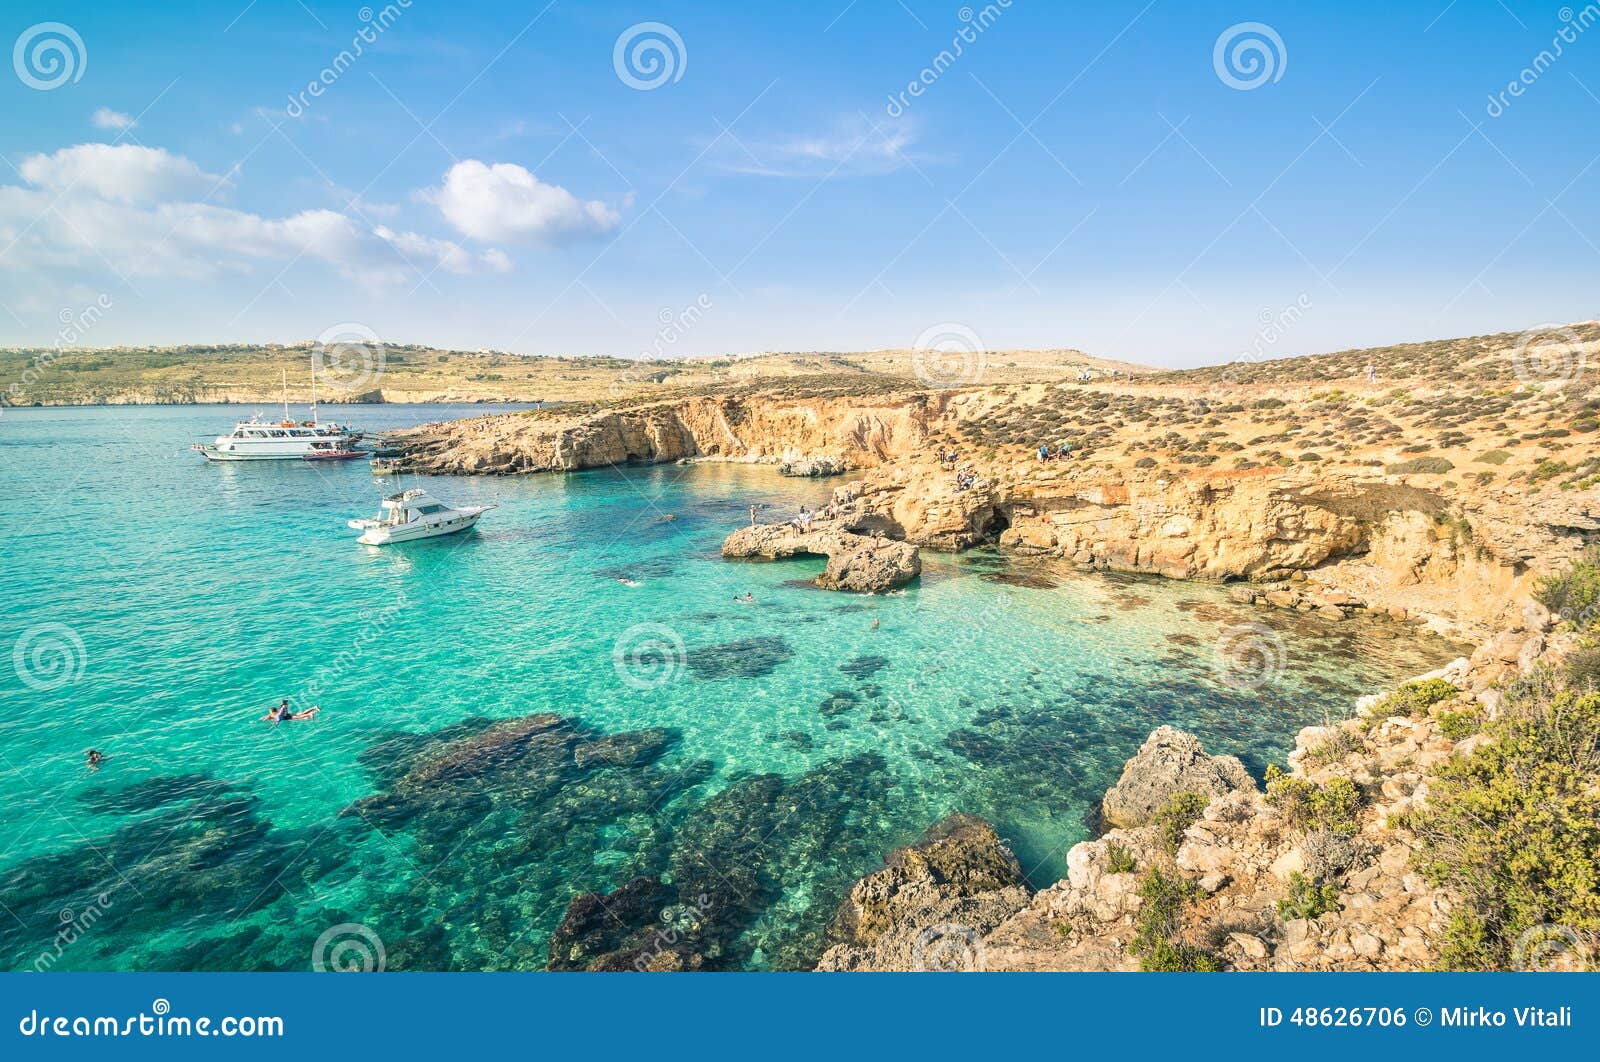 the world famous blue lagoon in comino island - malta